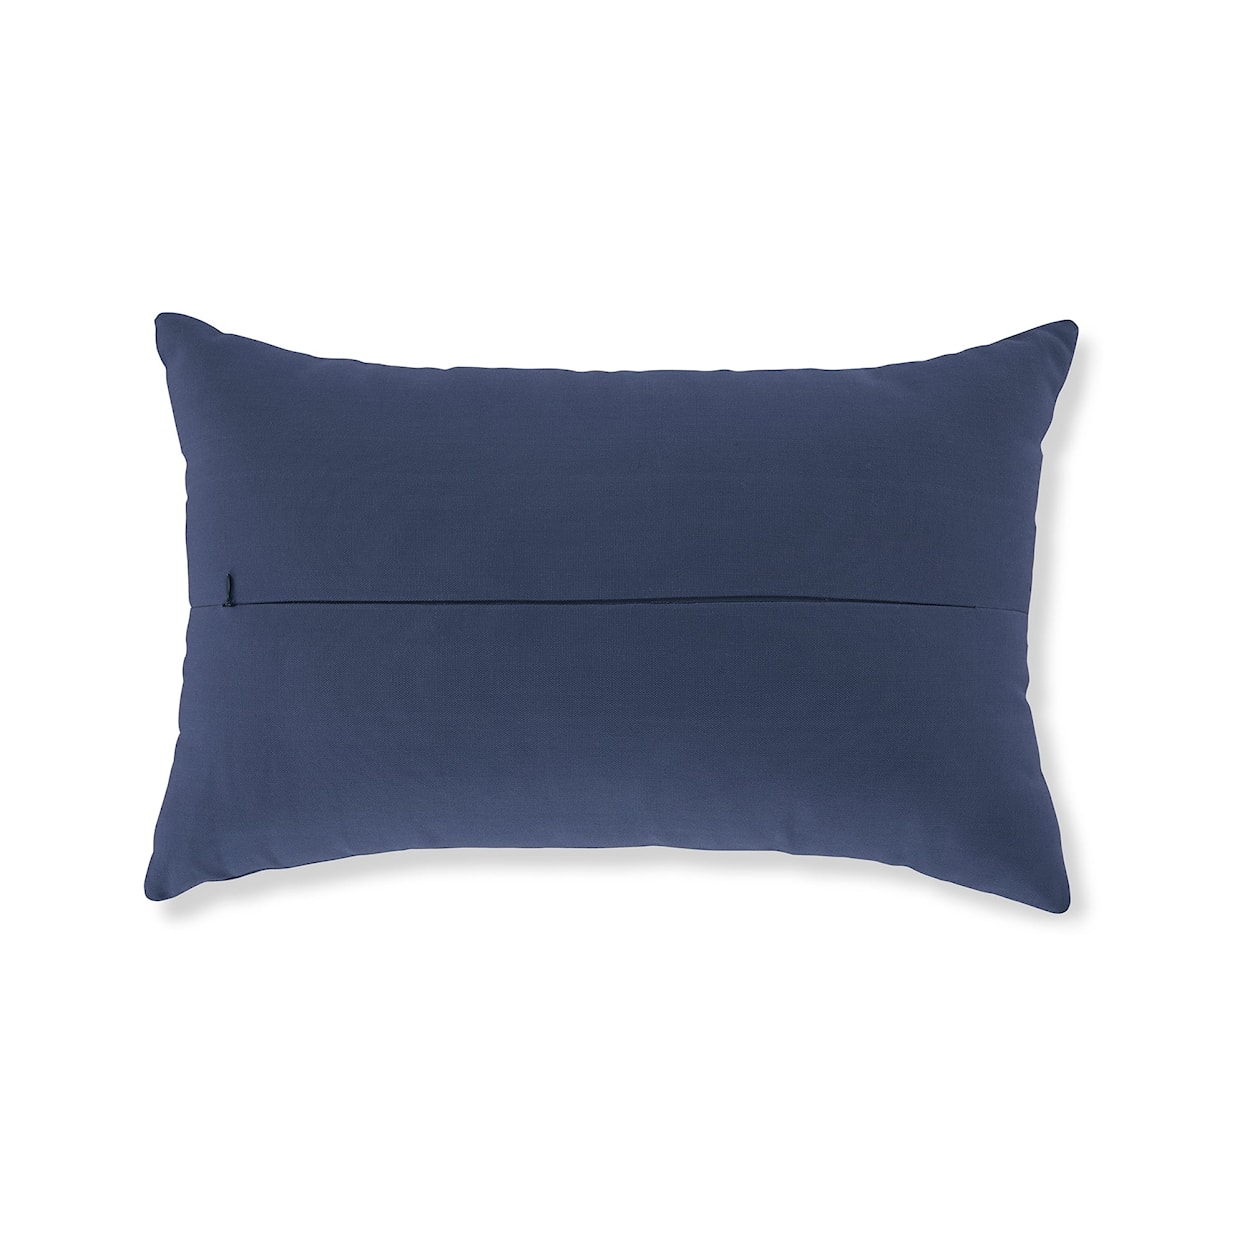 Ashley Furniture Signature Design Velvetley Pillow